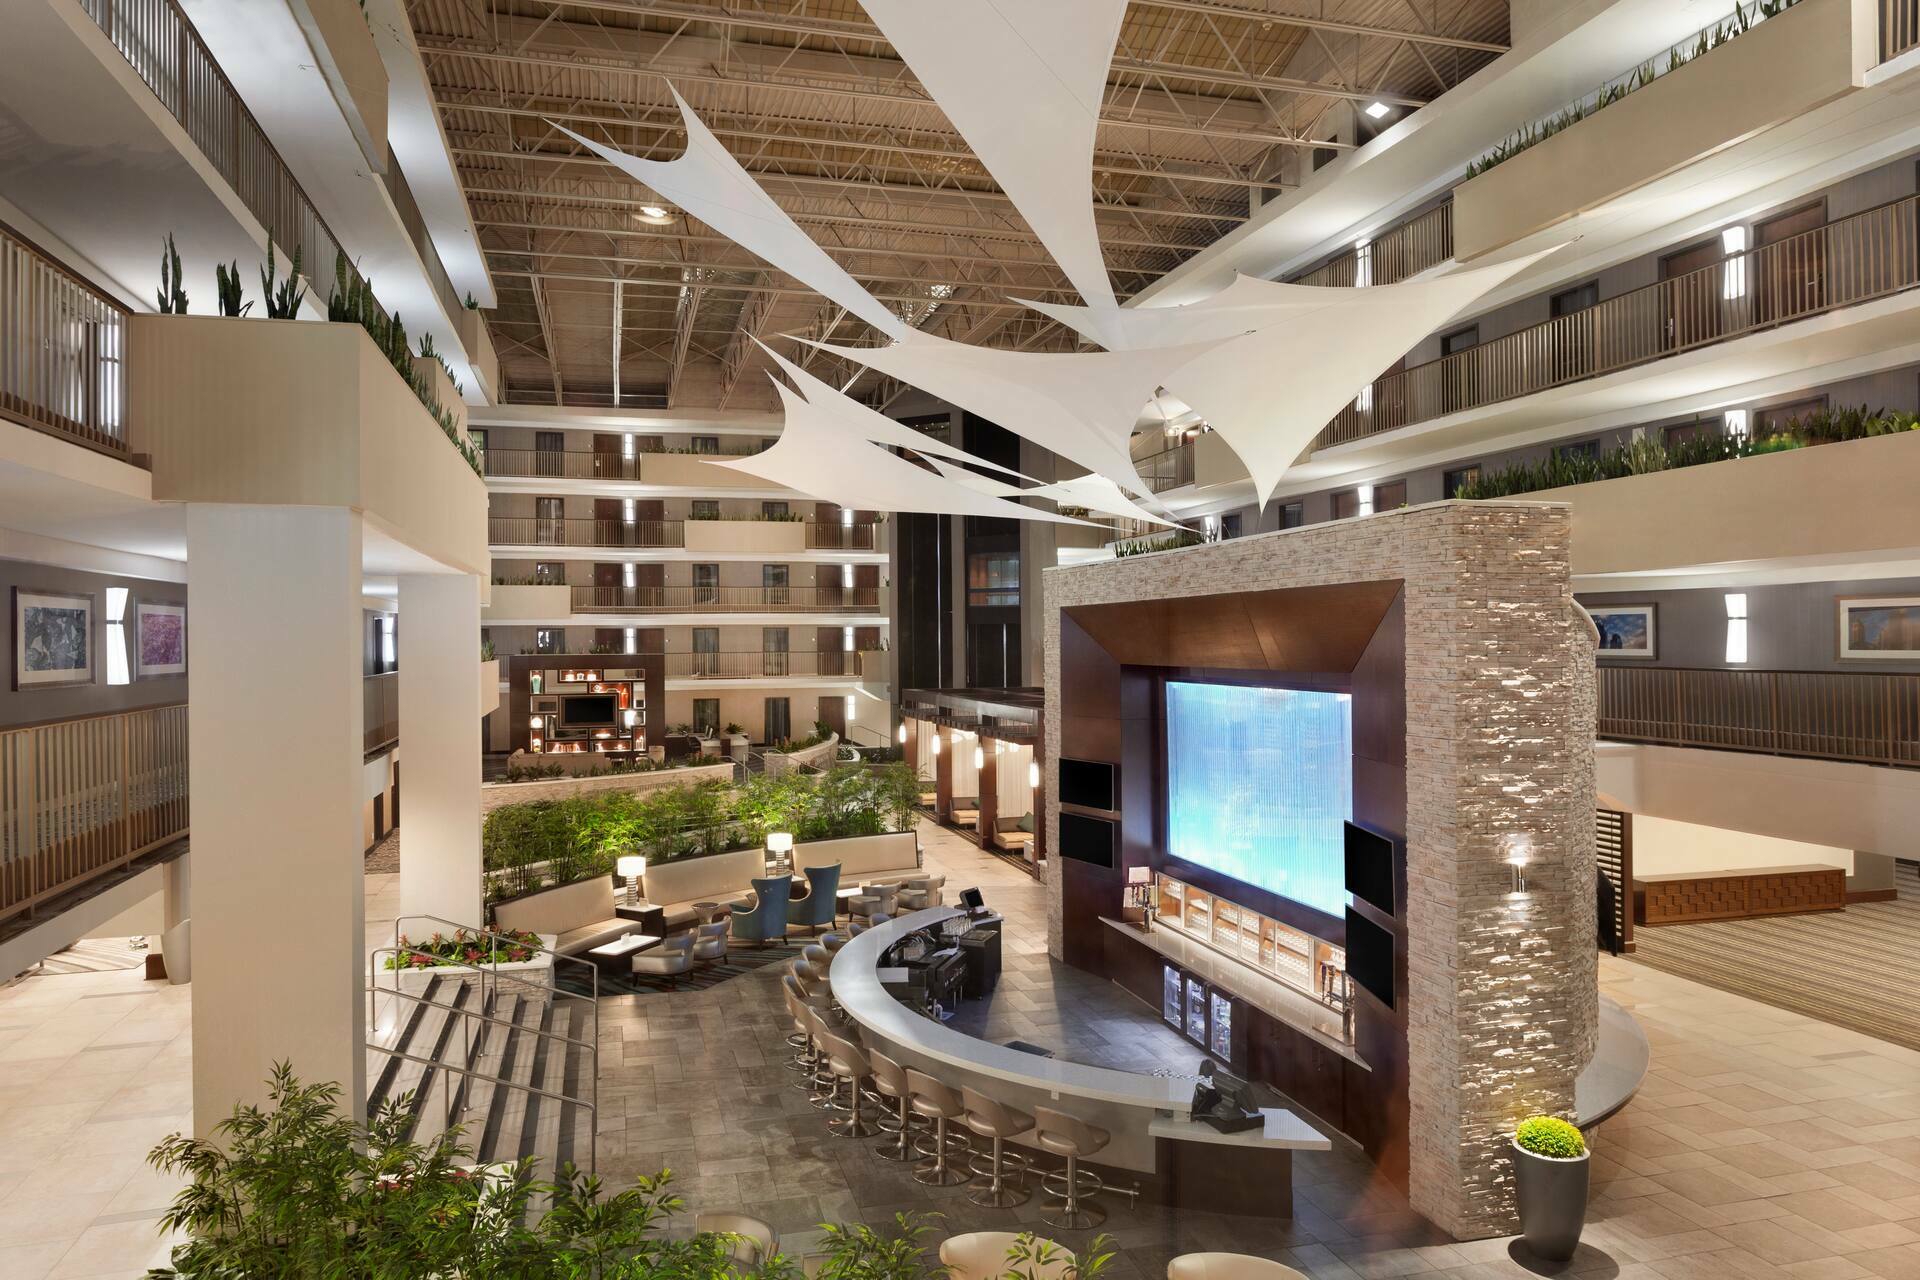 Photo of Embassy Suites by Hilton Atlanta Airport, Atlanta, GA